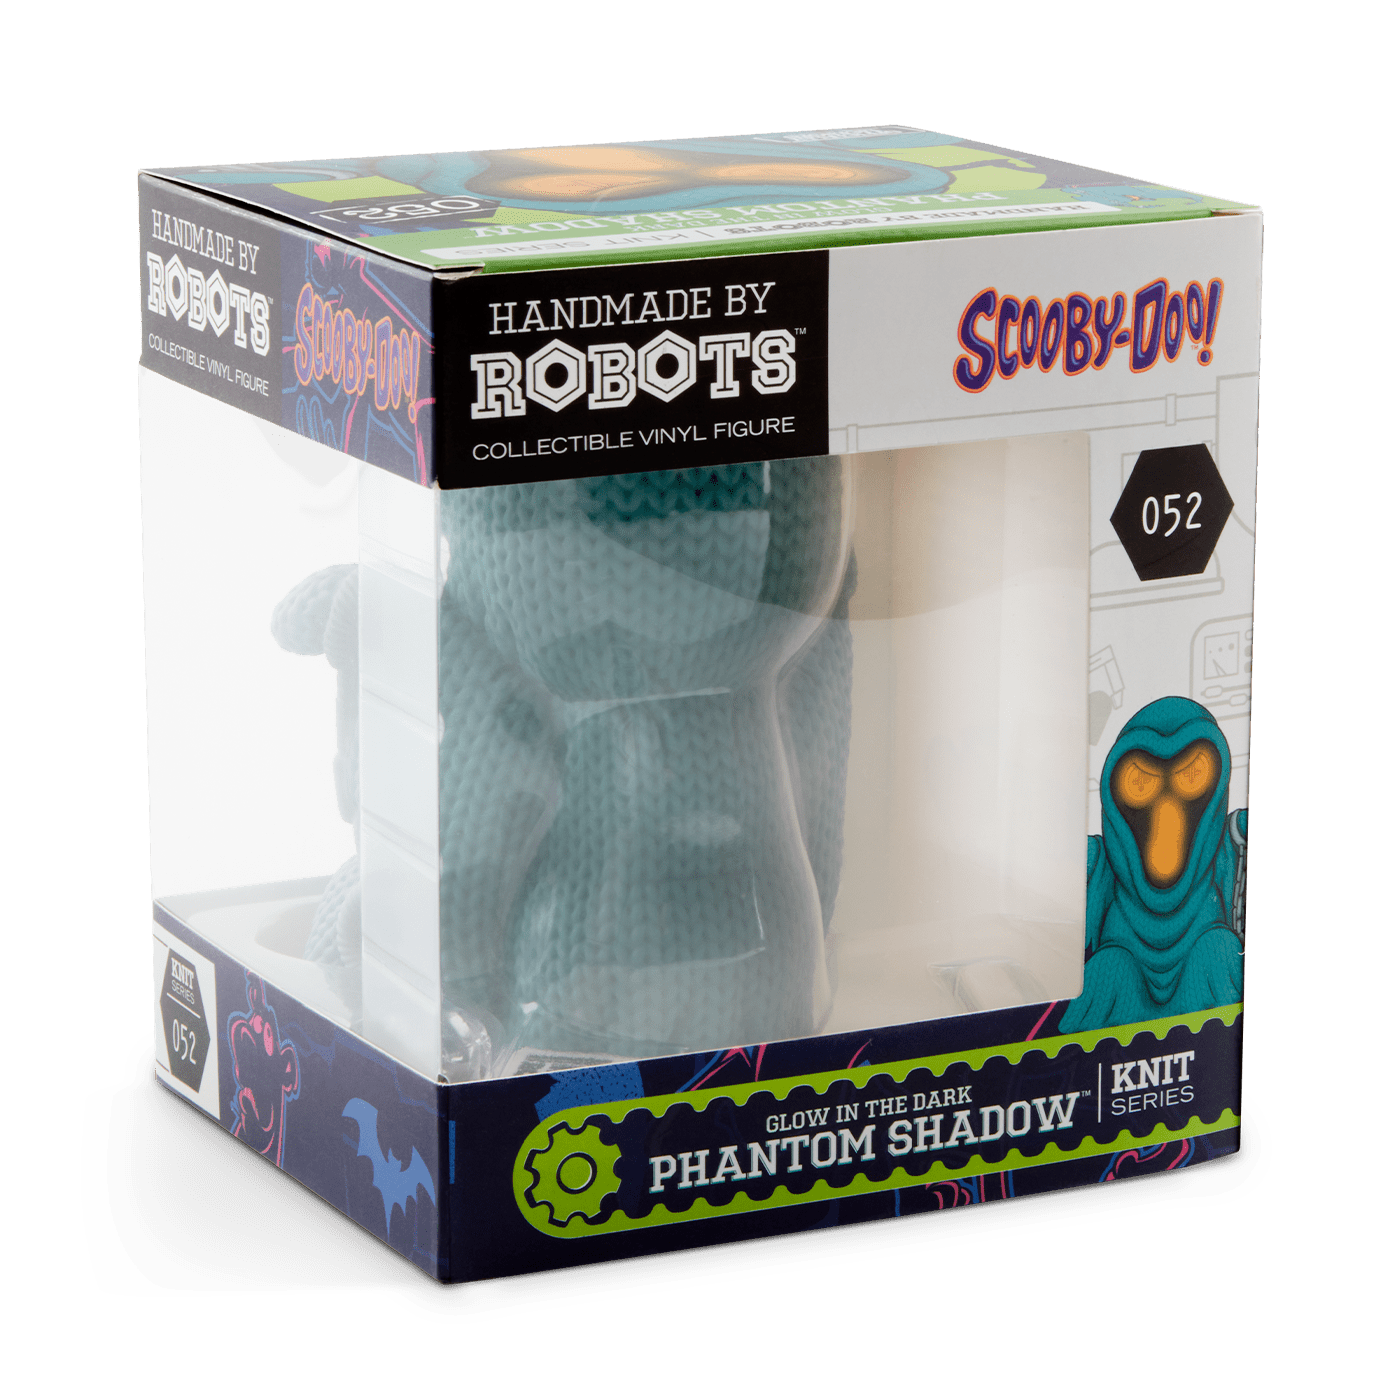 Phantom Shadow #052 - Scooby-Doo - Handmade by Robots - Limited Edition